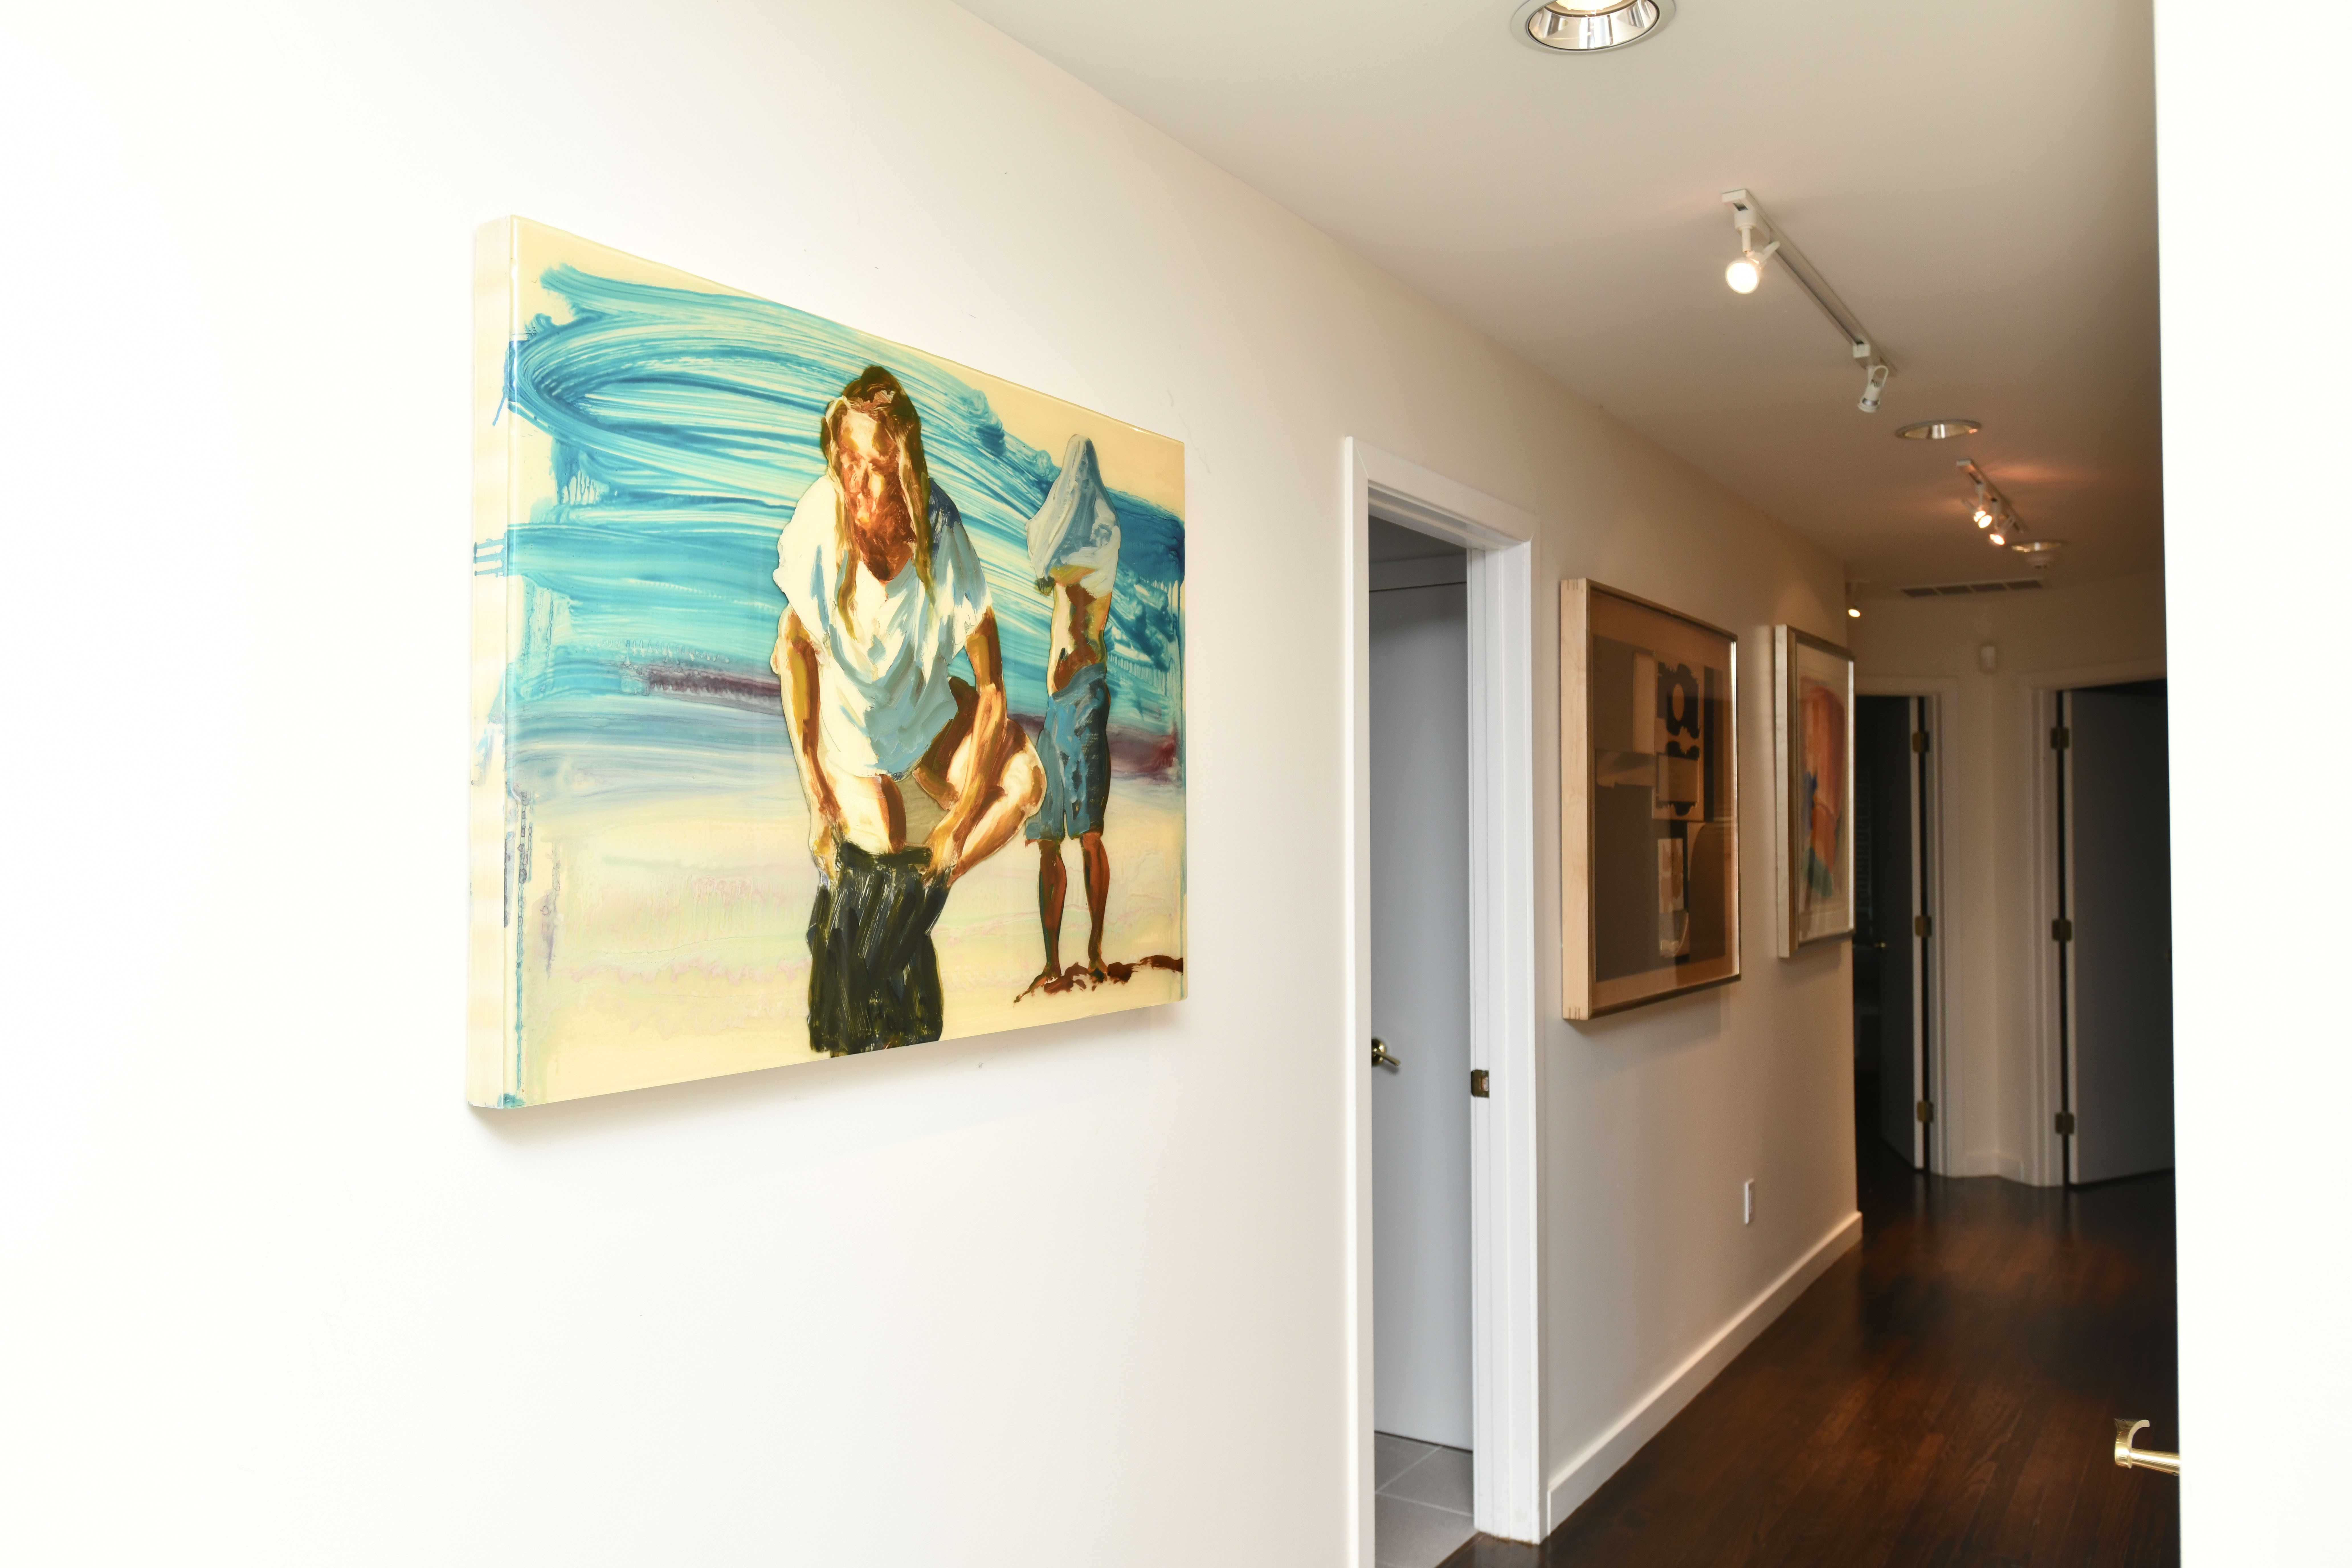 Artwork covers the walls in Rick Friedman's Southampton home. DANA SHAW